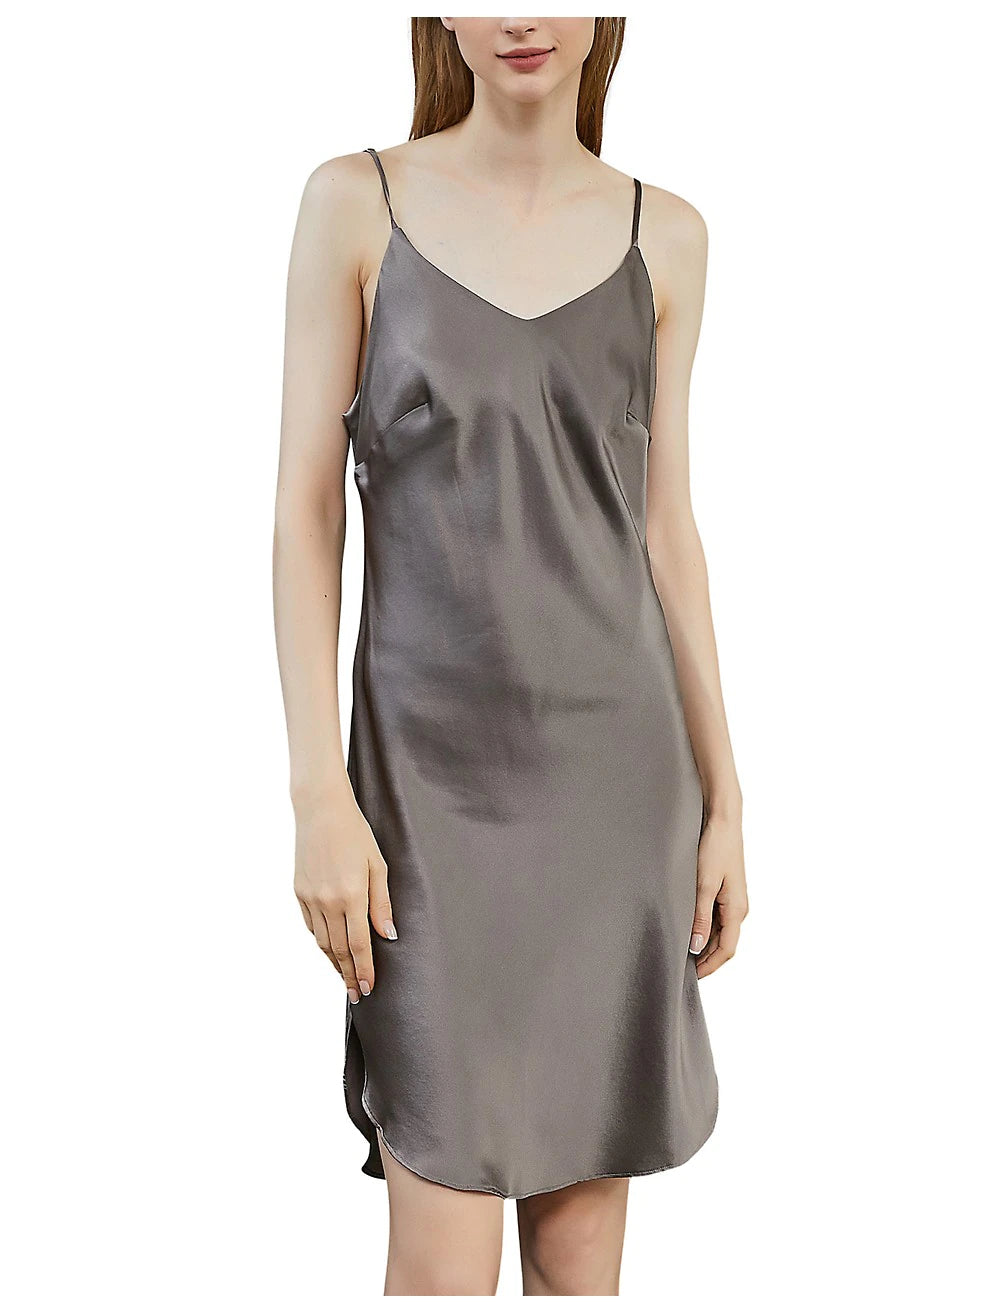 SOFT STROKES LINGERIE - River Nymph Pure Silk Slip Dress - Beige L, Charcoal XL or Navy Blue 2XL